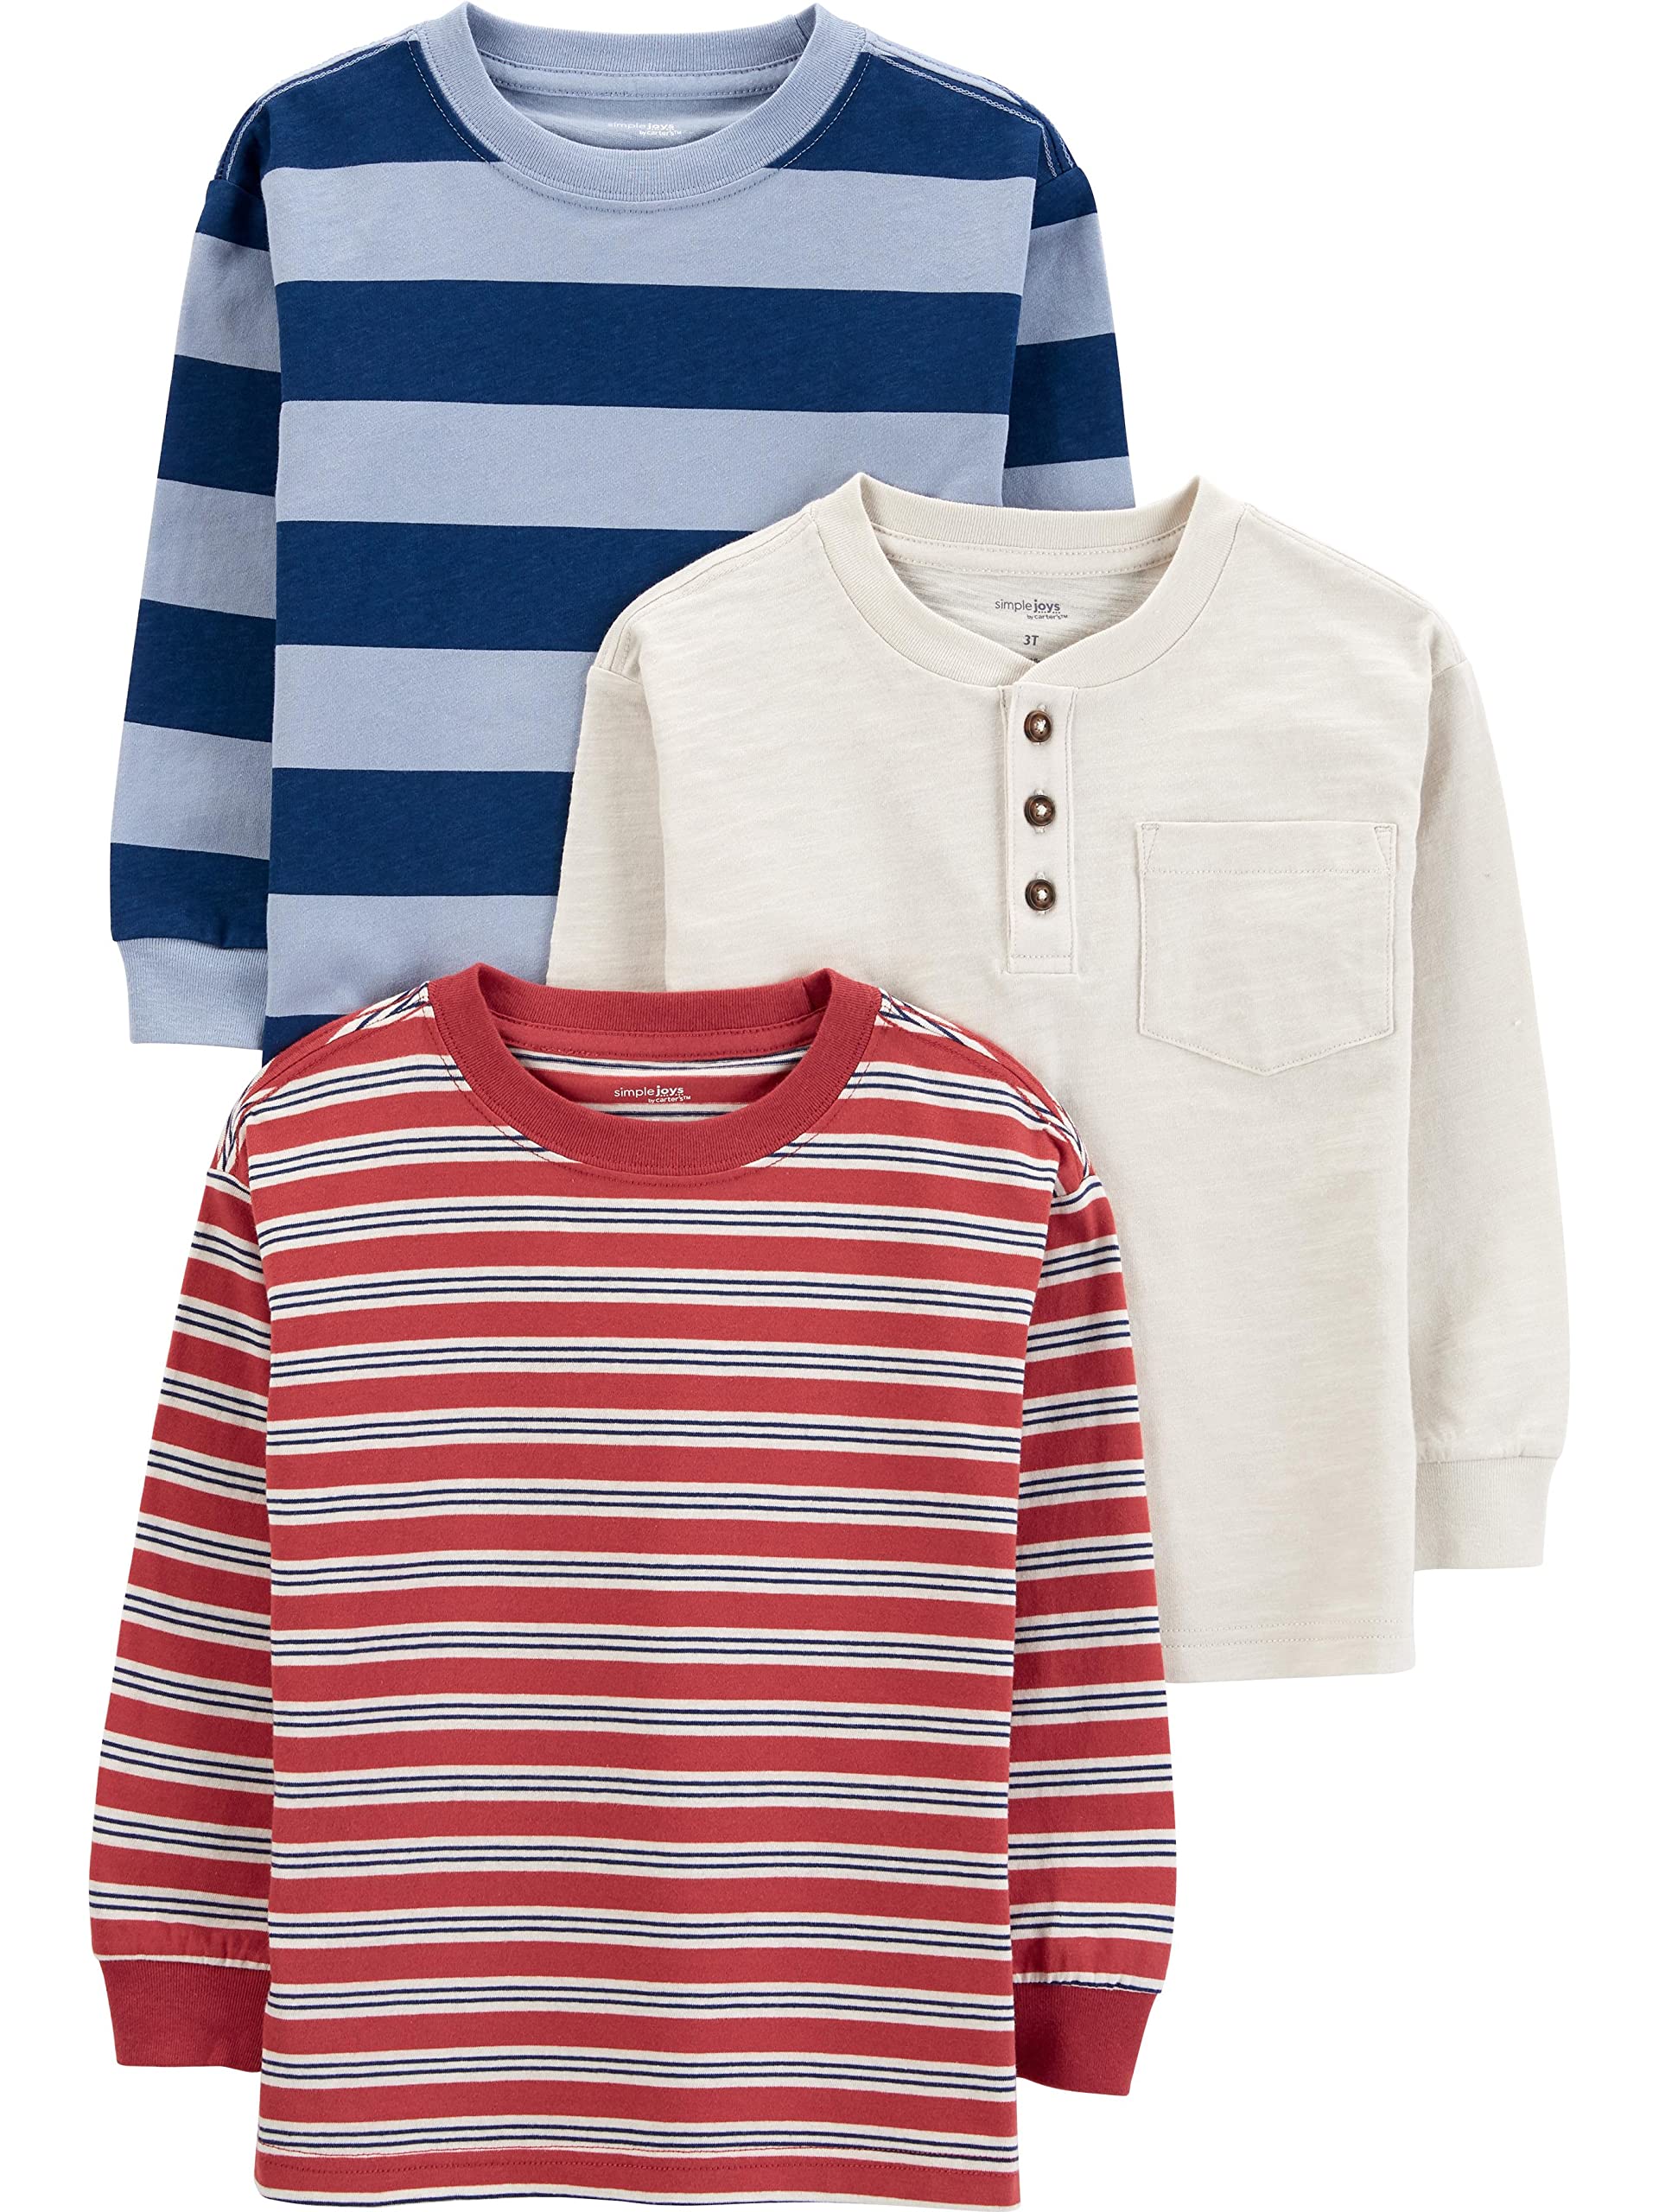 Simple Joys by Carter's Boys' 3-Pack Long Sleeve Shirts